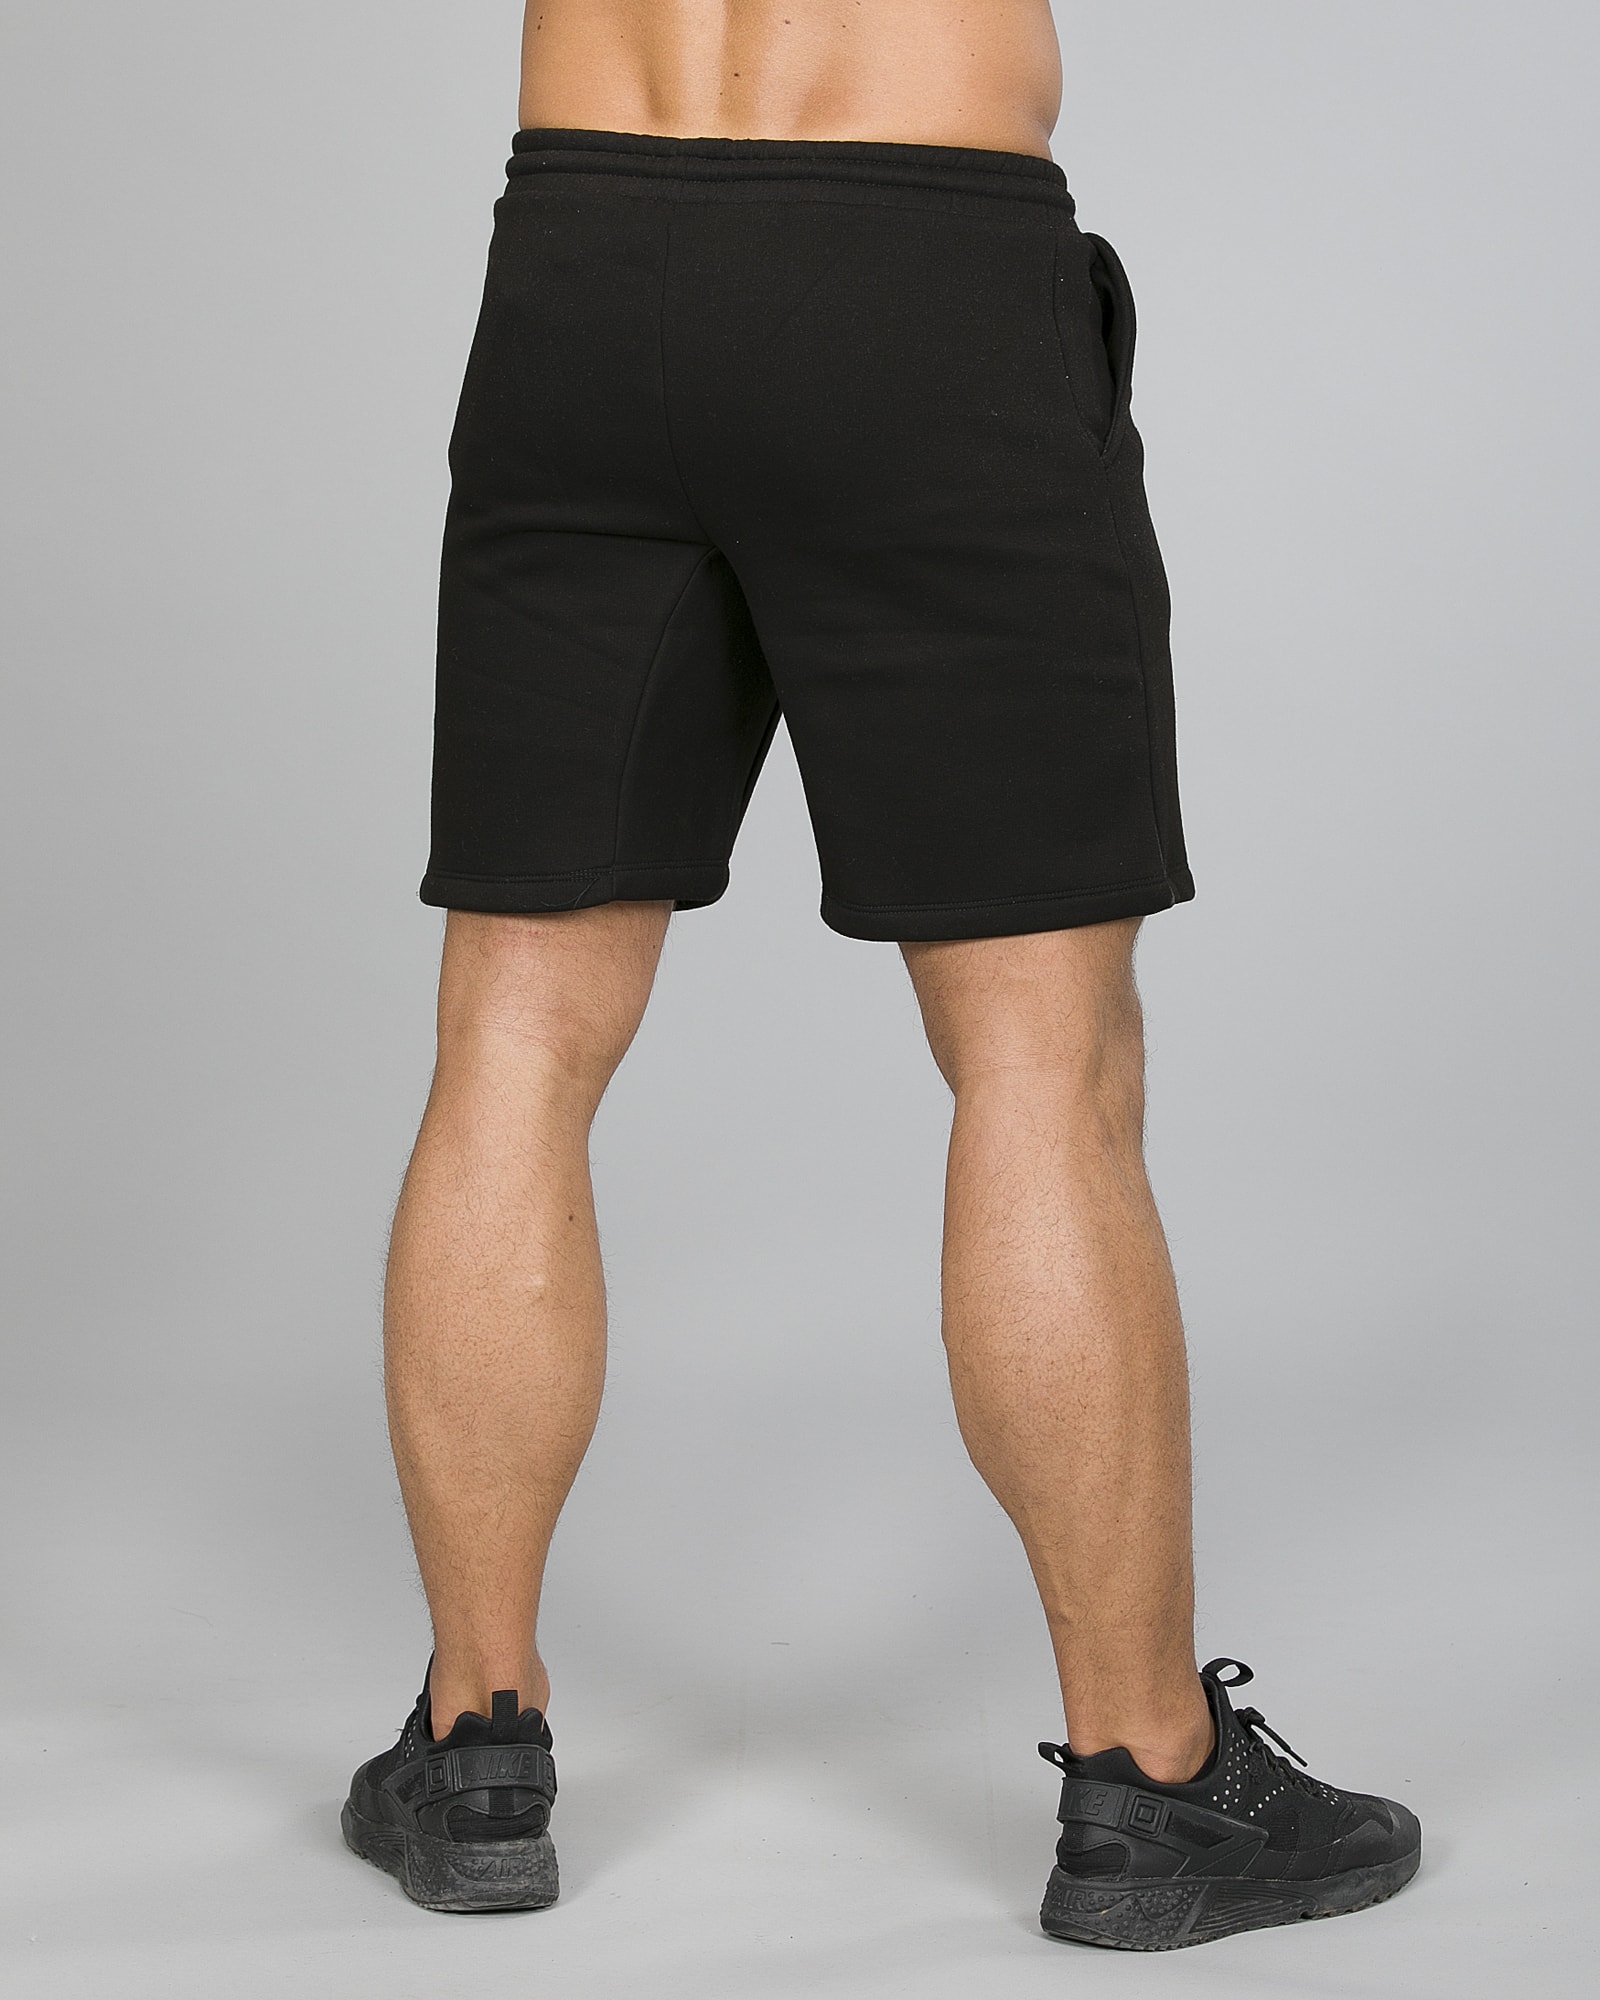 Crest Shorts ss18336b Black c